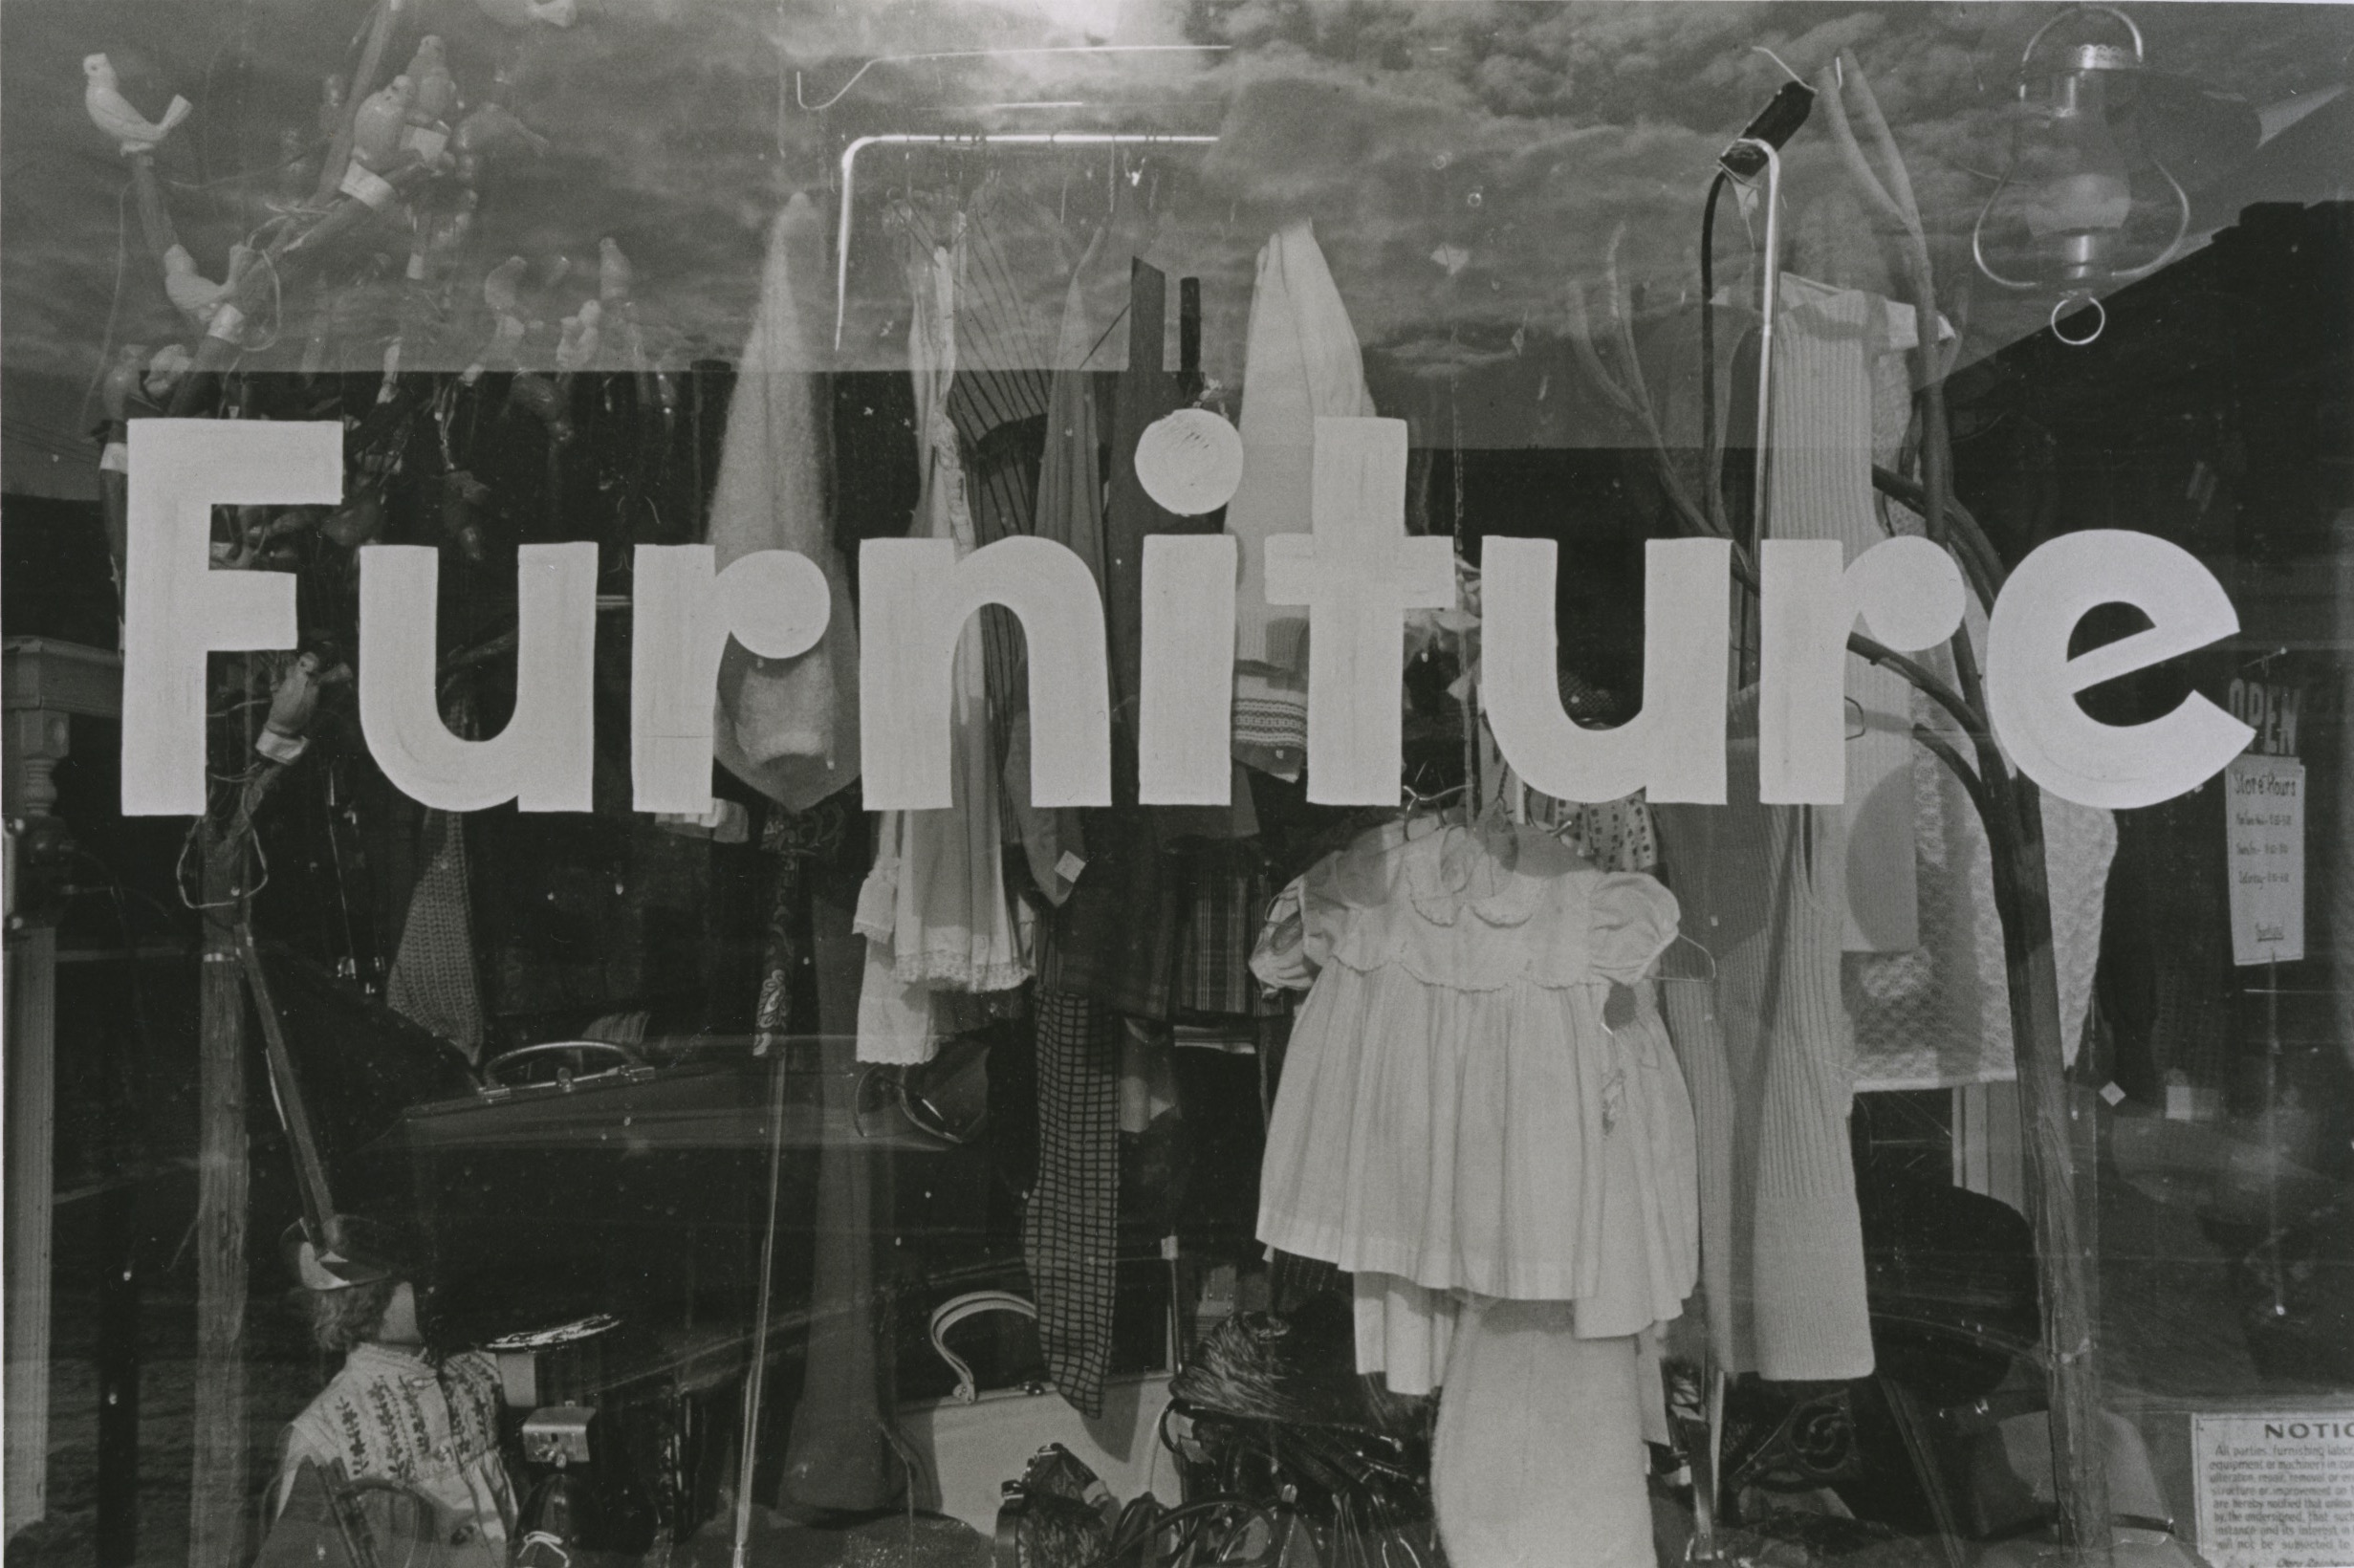 Furniture, Minneapolis, 1970